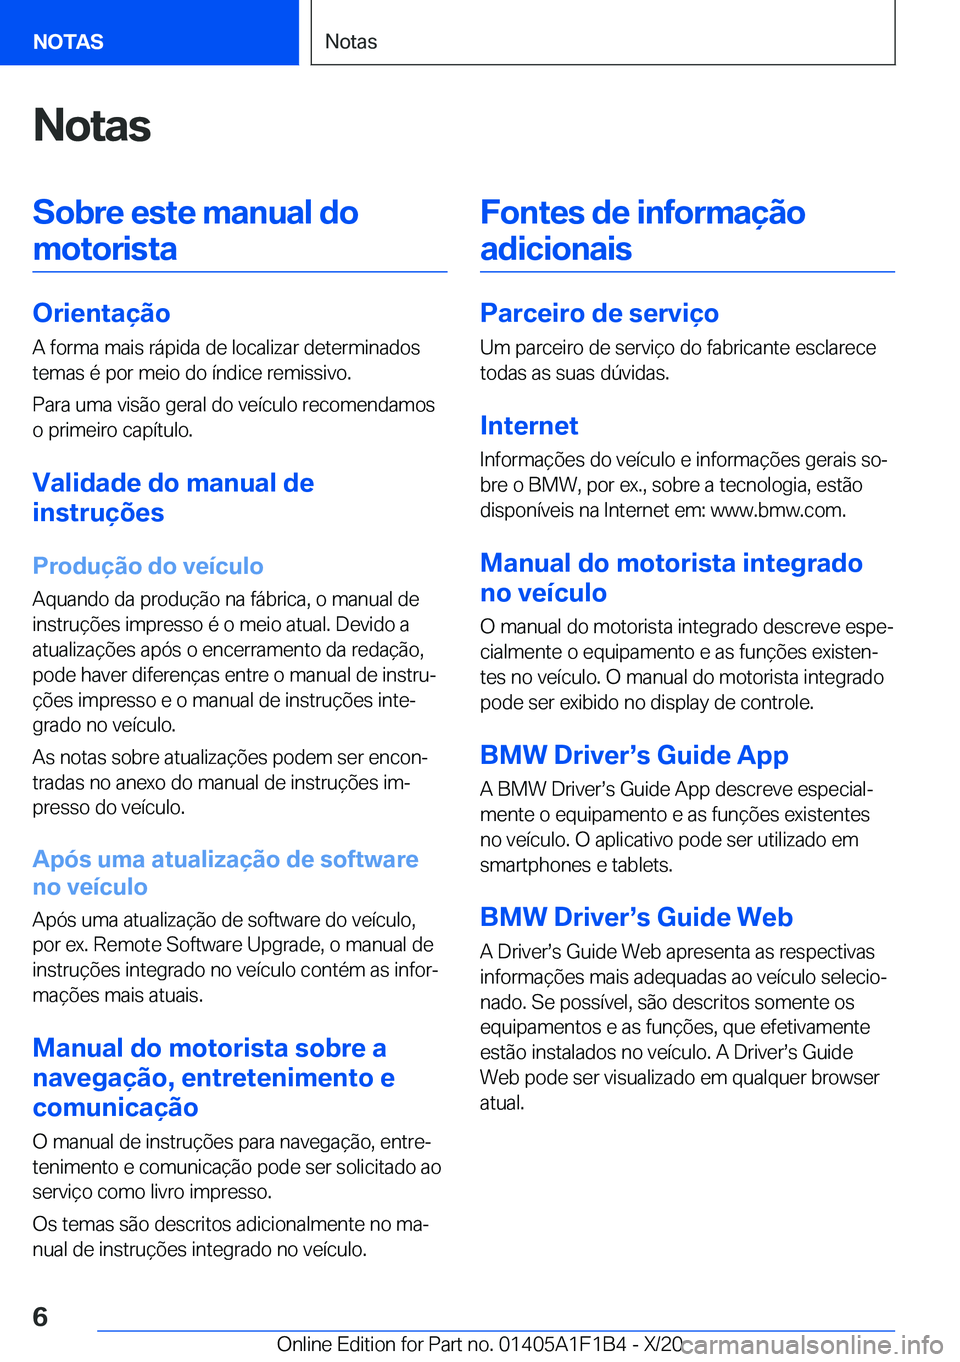 BMW M5 2021  Manual do condutor (in Portuguese) �N�o�t�a�s�S�o�b�r�e��e�s�t�e��m�a�n�u�a�l��d�o�m�o�t�o�r�i�s�t�a
�O�r�i�e�n�t�a�